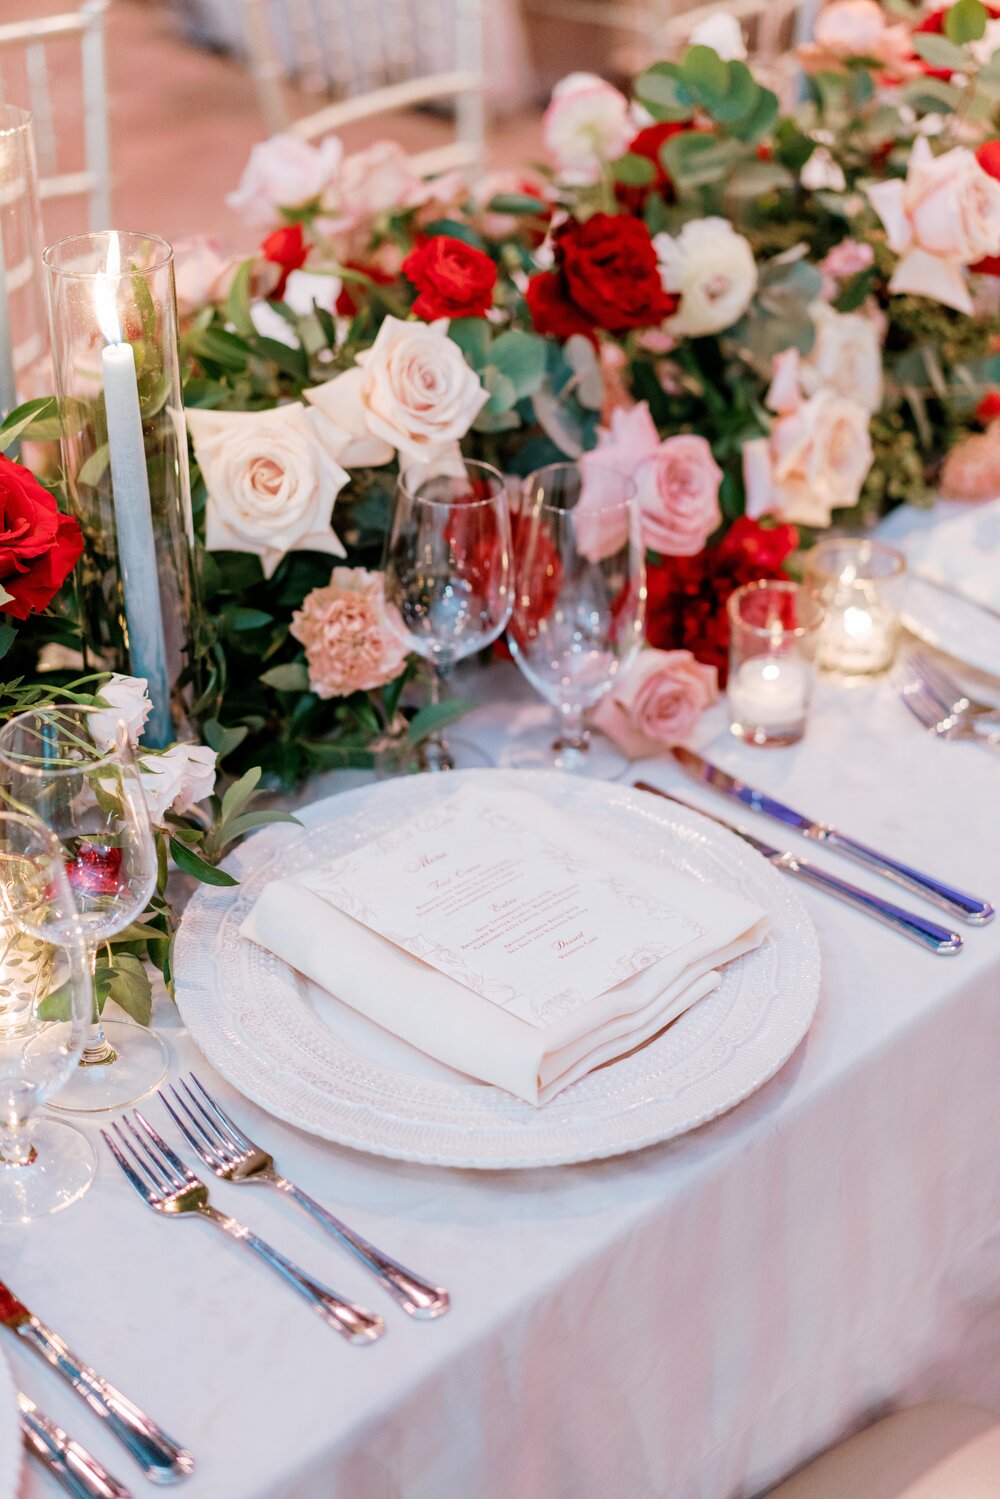 kj-tablescape-reception-plate-charger-candleslit-wedding-houston-riviere.jpg